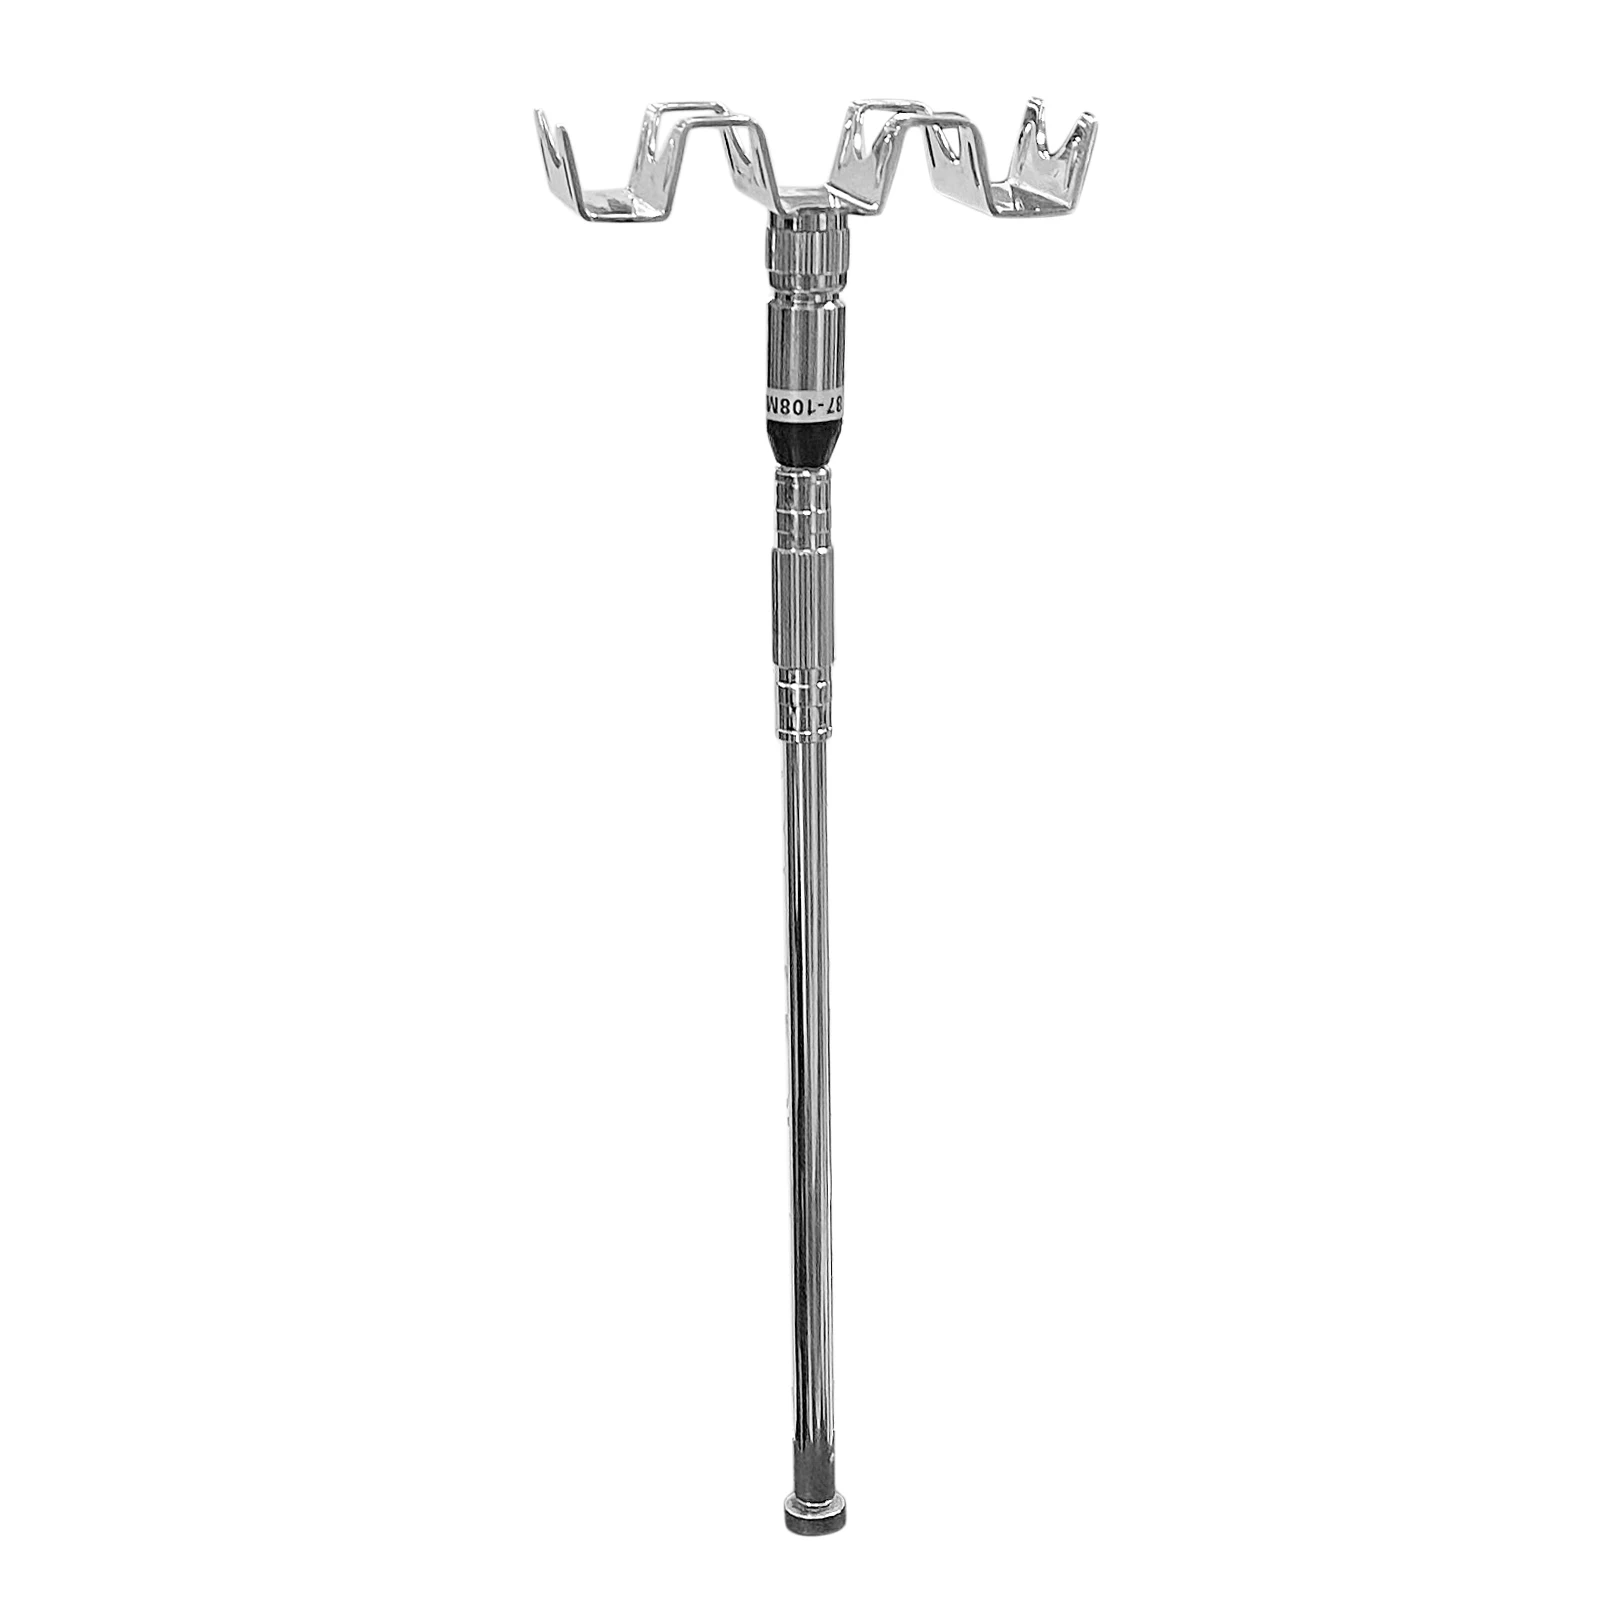 Foldable Cigar Stand Rest Rod Rack 25cm/33cm/48cm Adjustable Tobacco Cigarette Golf Ball Holder BBQ Supplies